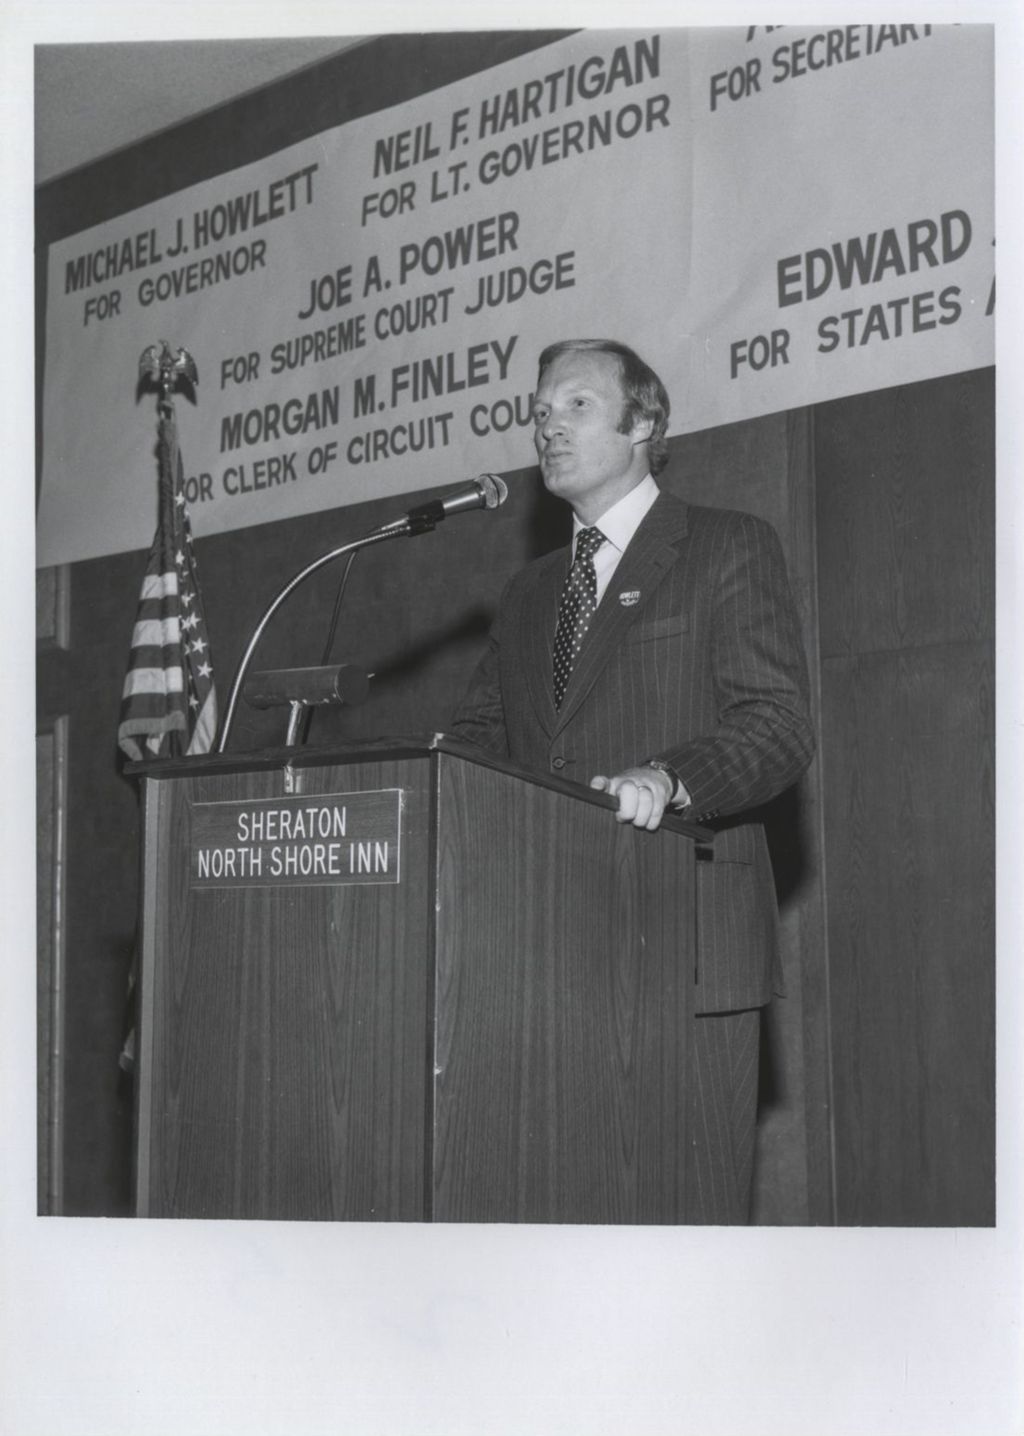 Miniature of Neil Hartigan speaking at a Democratic Club of Winnetka event